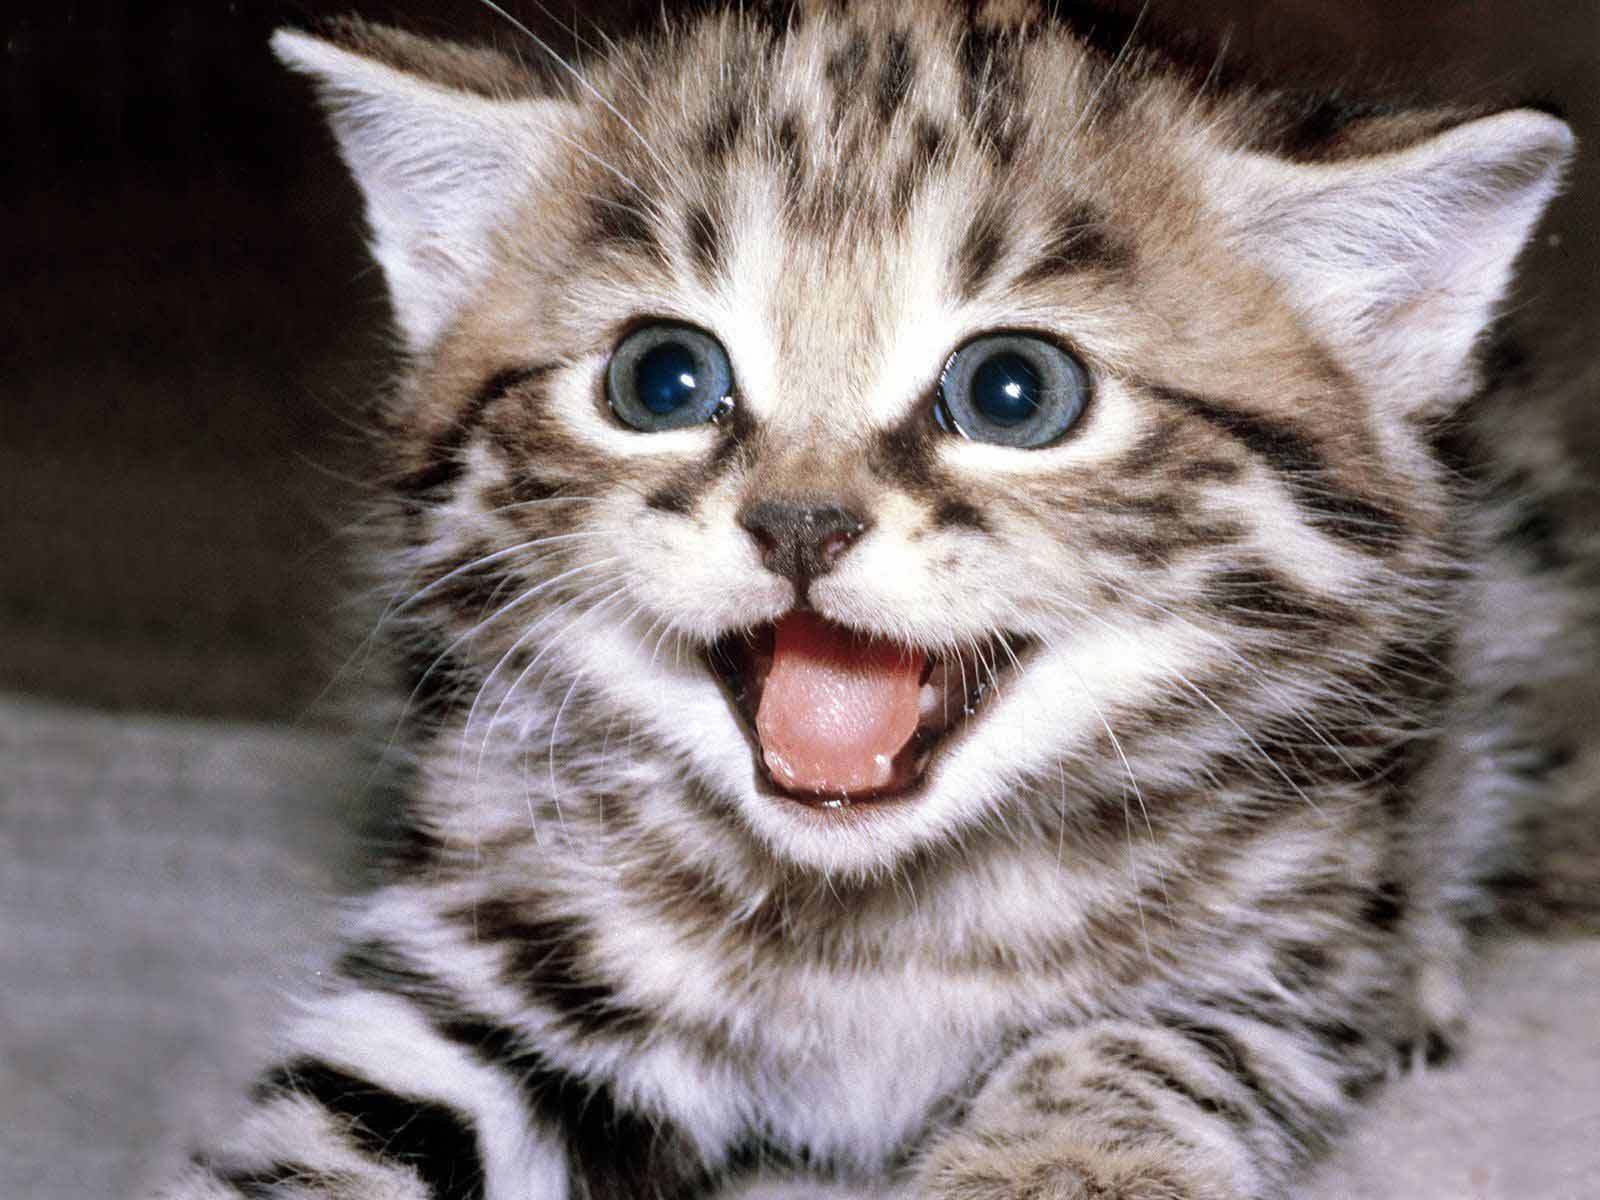 happy-kitten-kittens-5890512-1600-1200.jpg